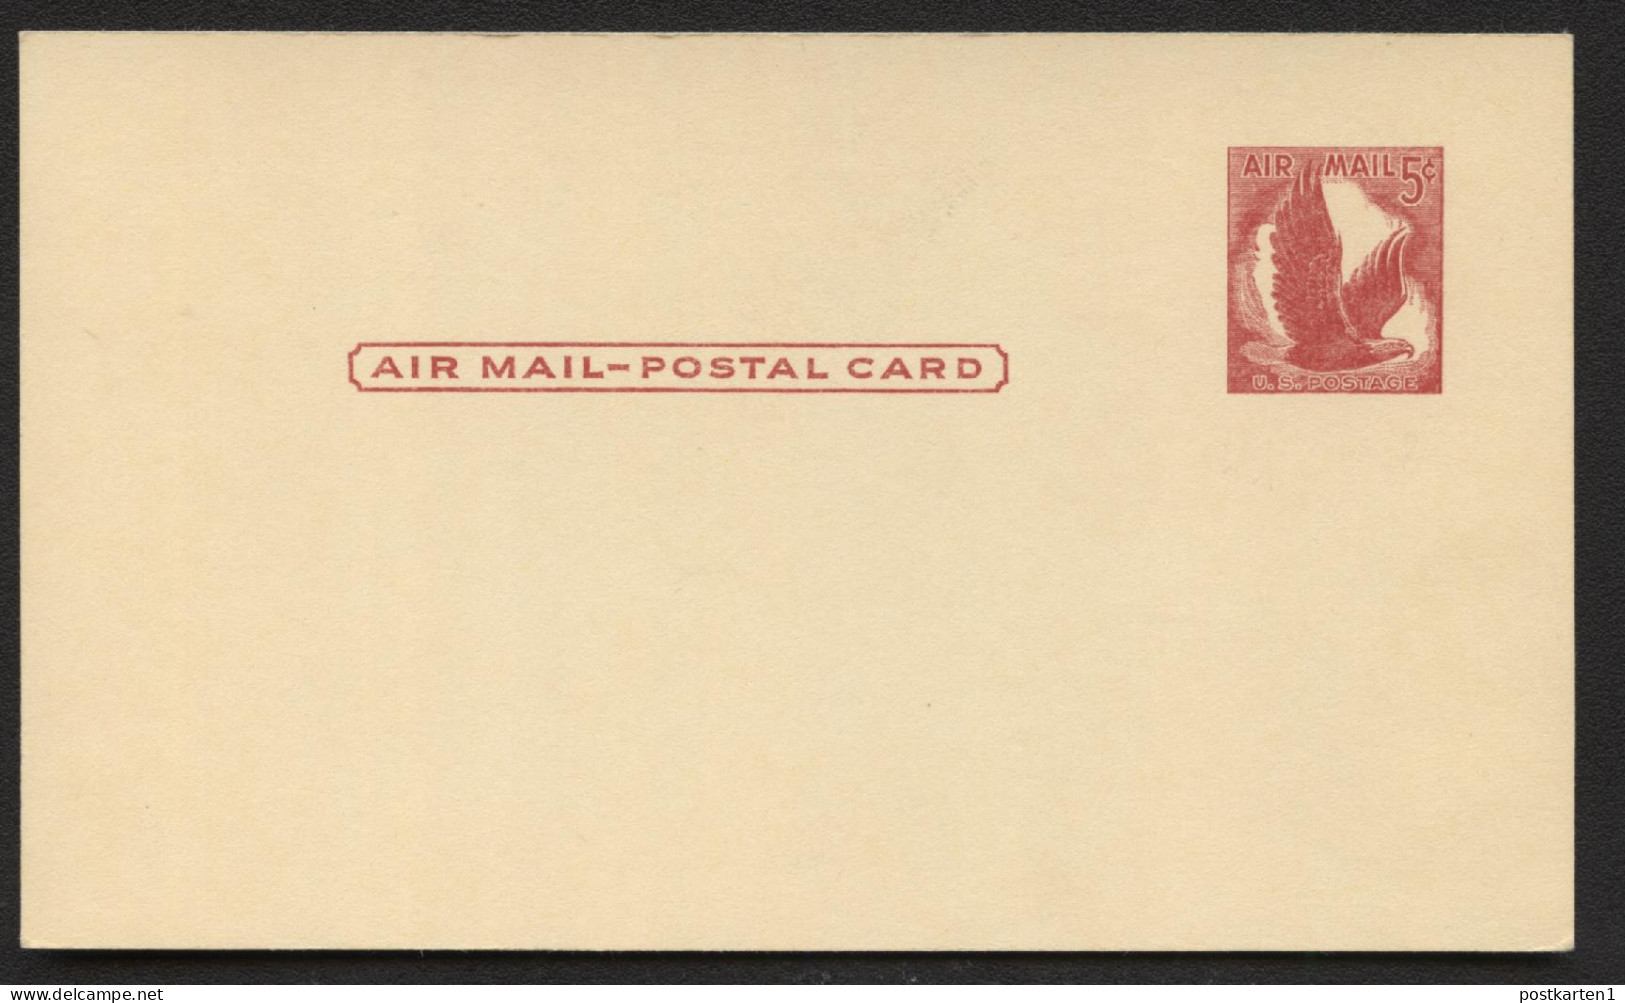 UXC2 Air Mail Postal Card Mint Vf 1958 - 1941-60